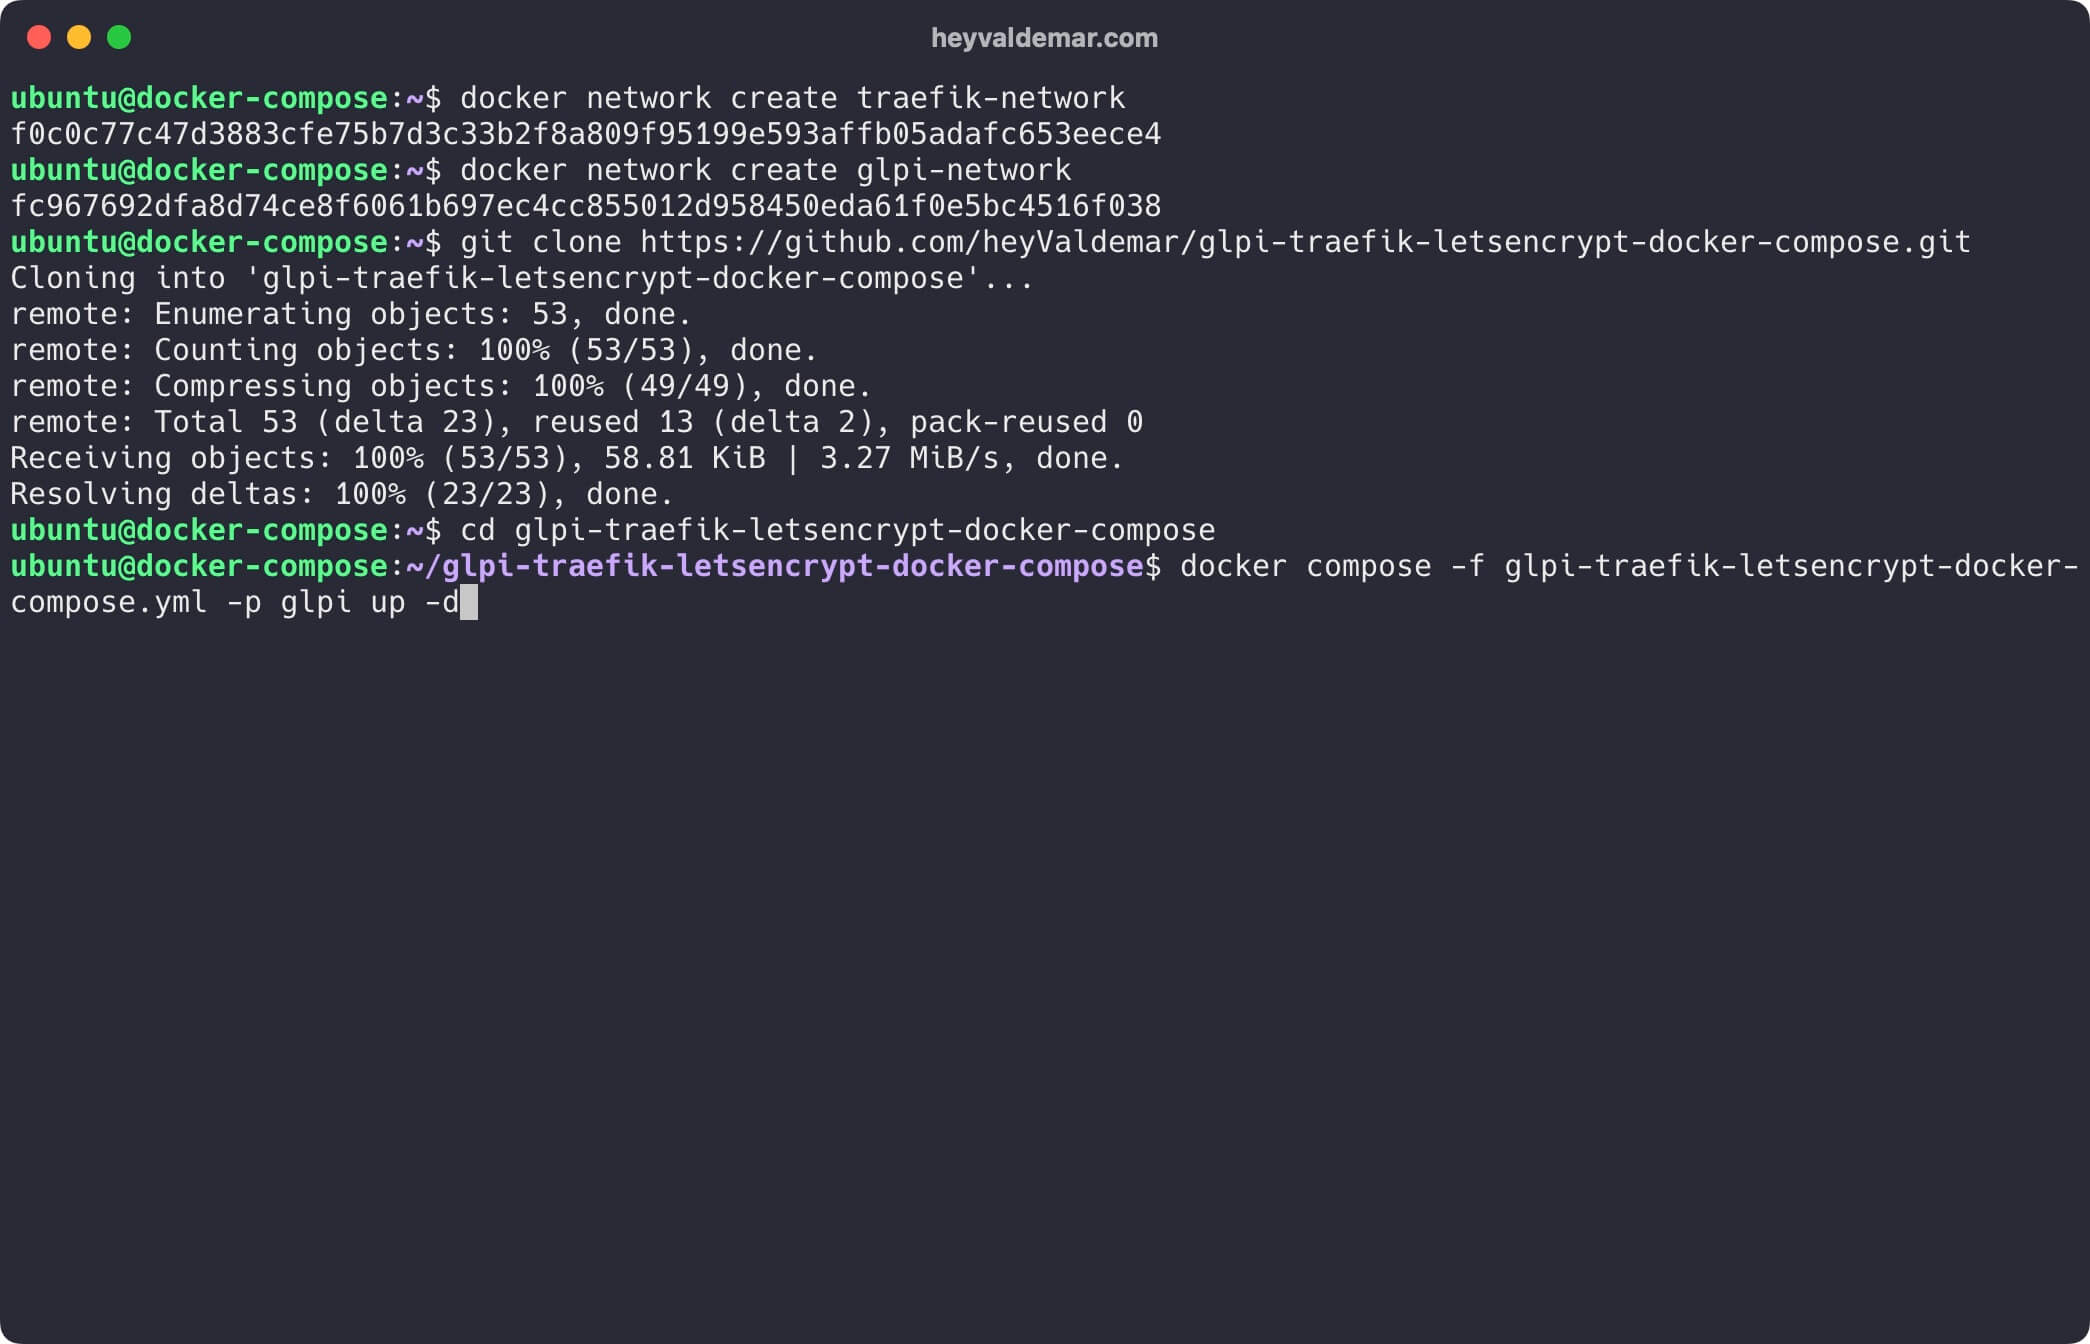 Install GLPI Using Docker Compose